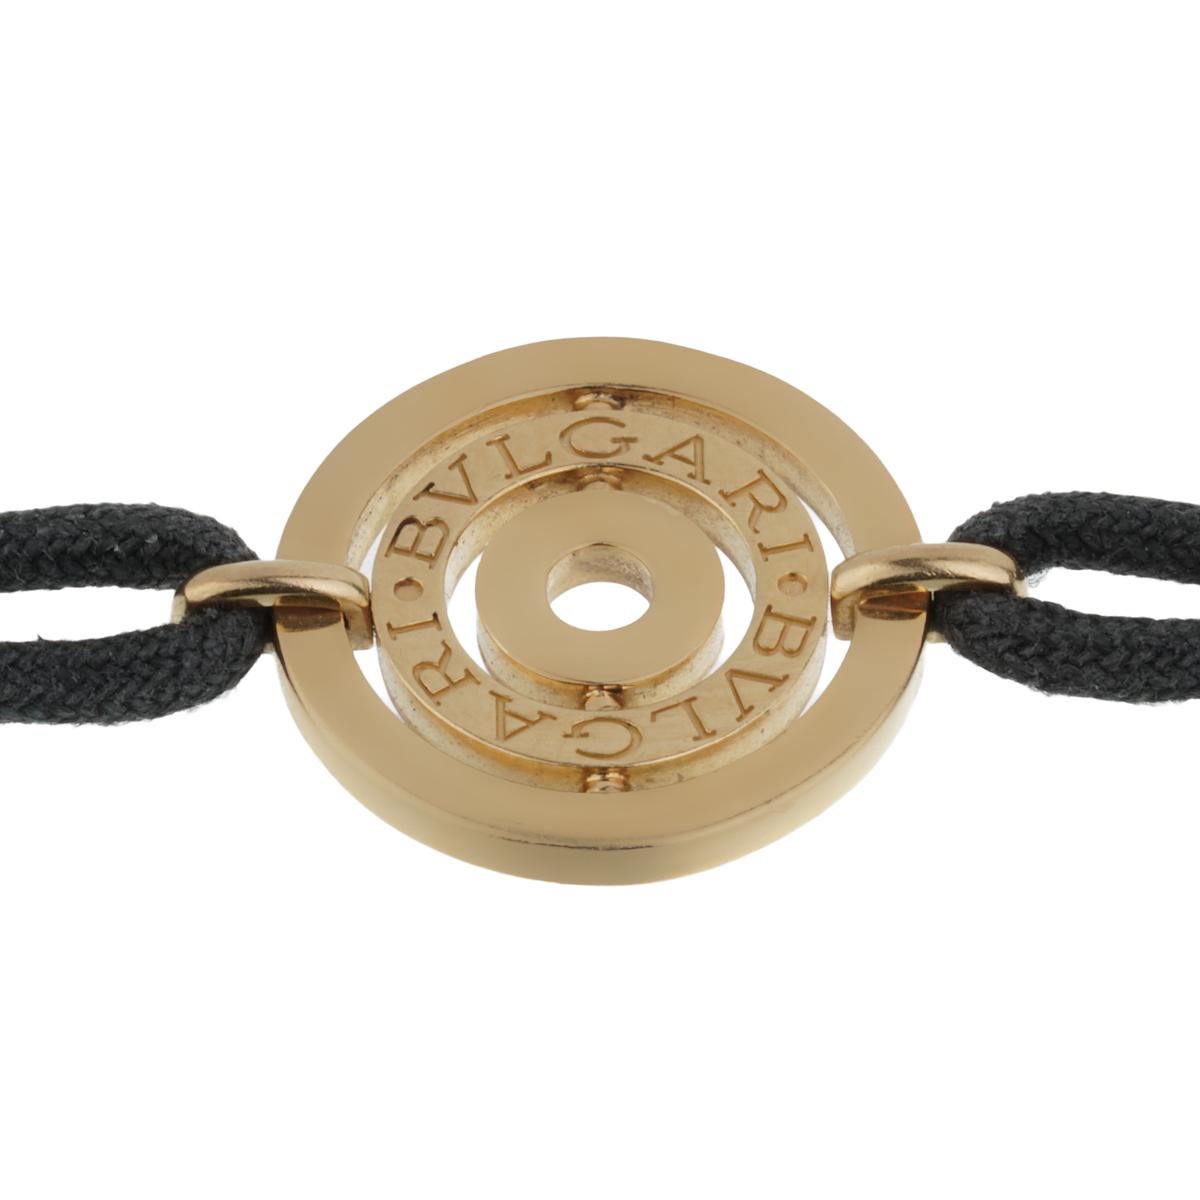 A vintage Bulgari Astrale Cerci bracelet showcasing the iconic Bulgari Bulgari motif on a black cotton string. The bracelet measures 6